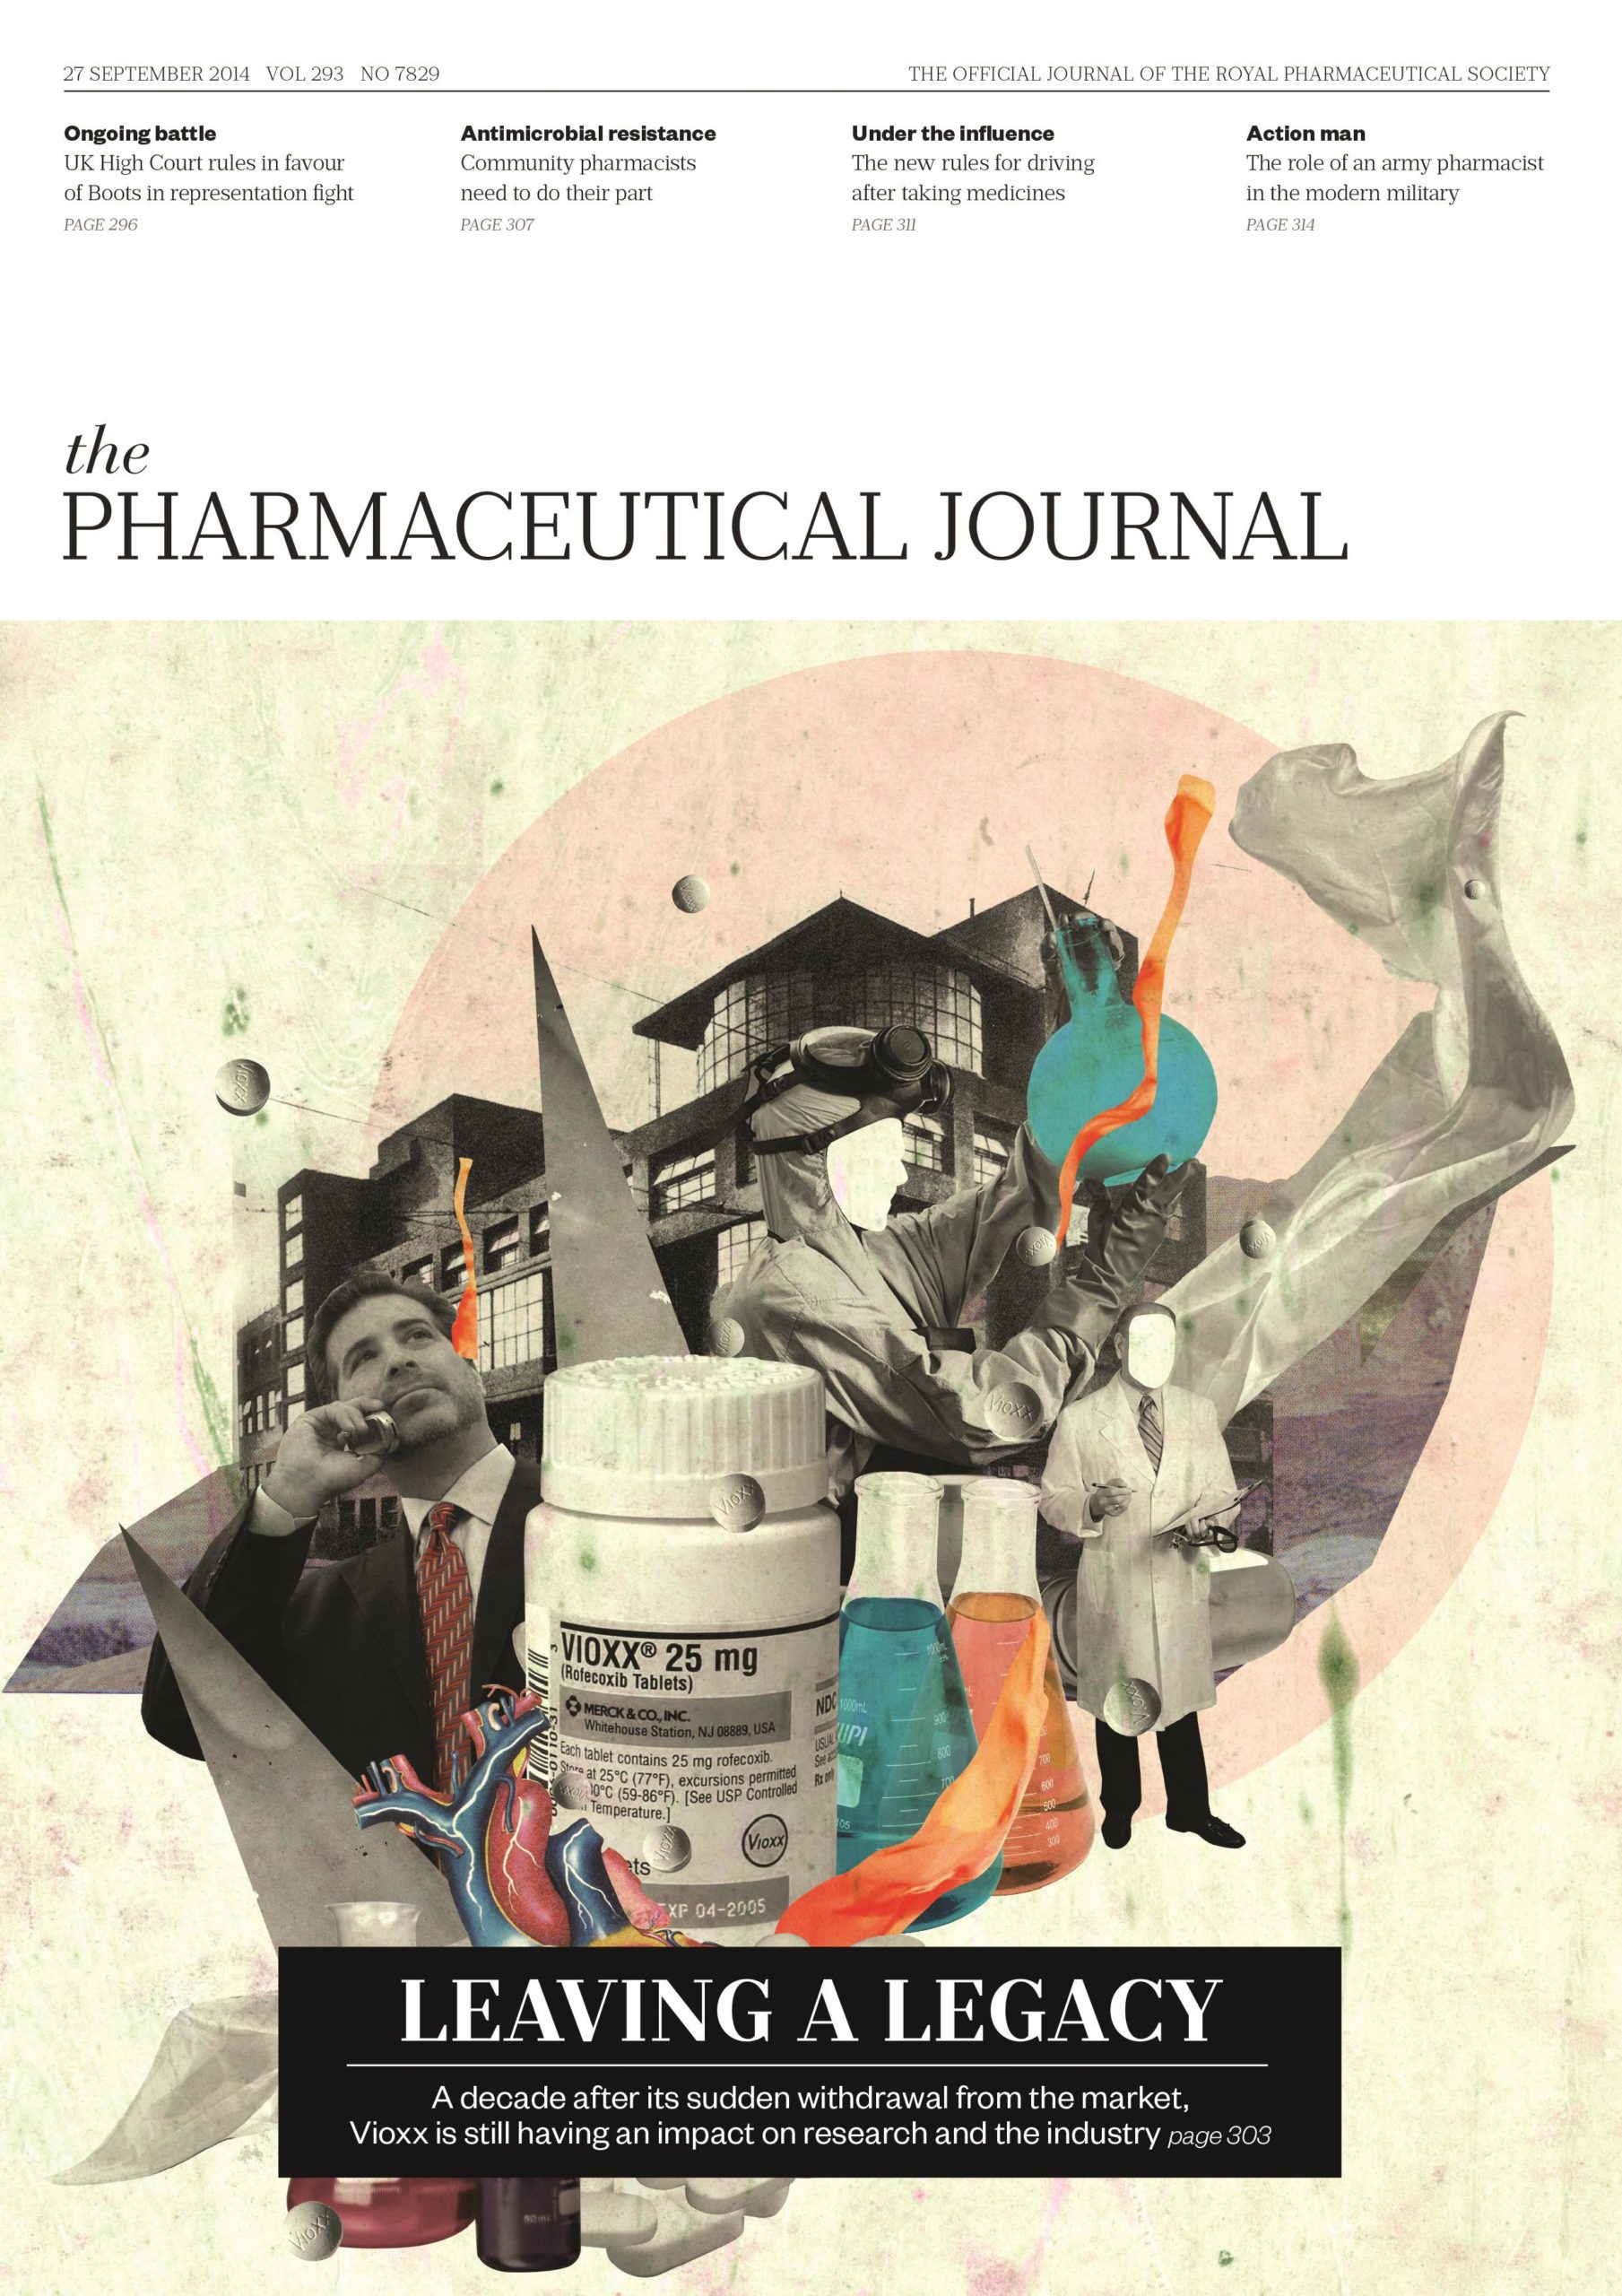 Publication issue cover for PJ, 27 September 2014, Vol 293, No 7829